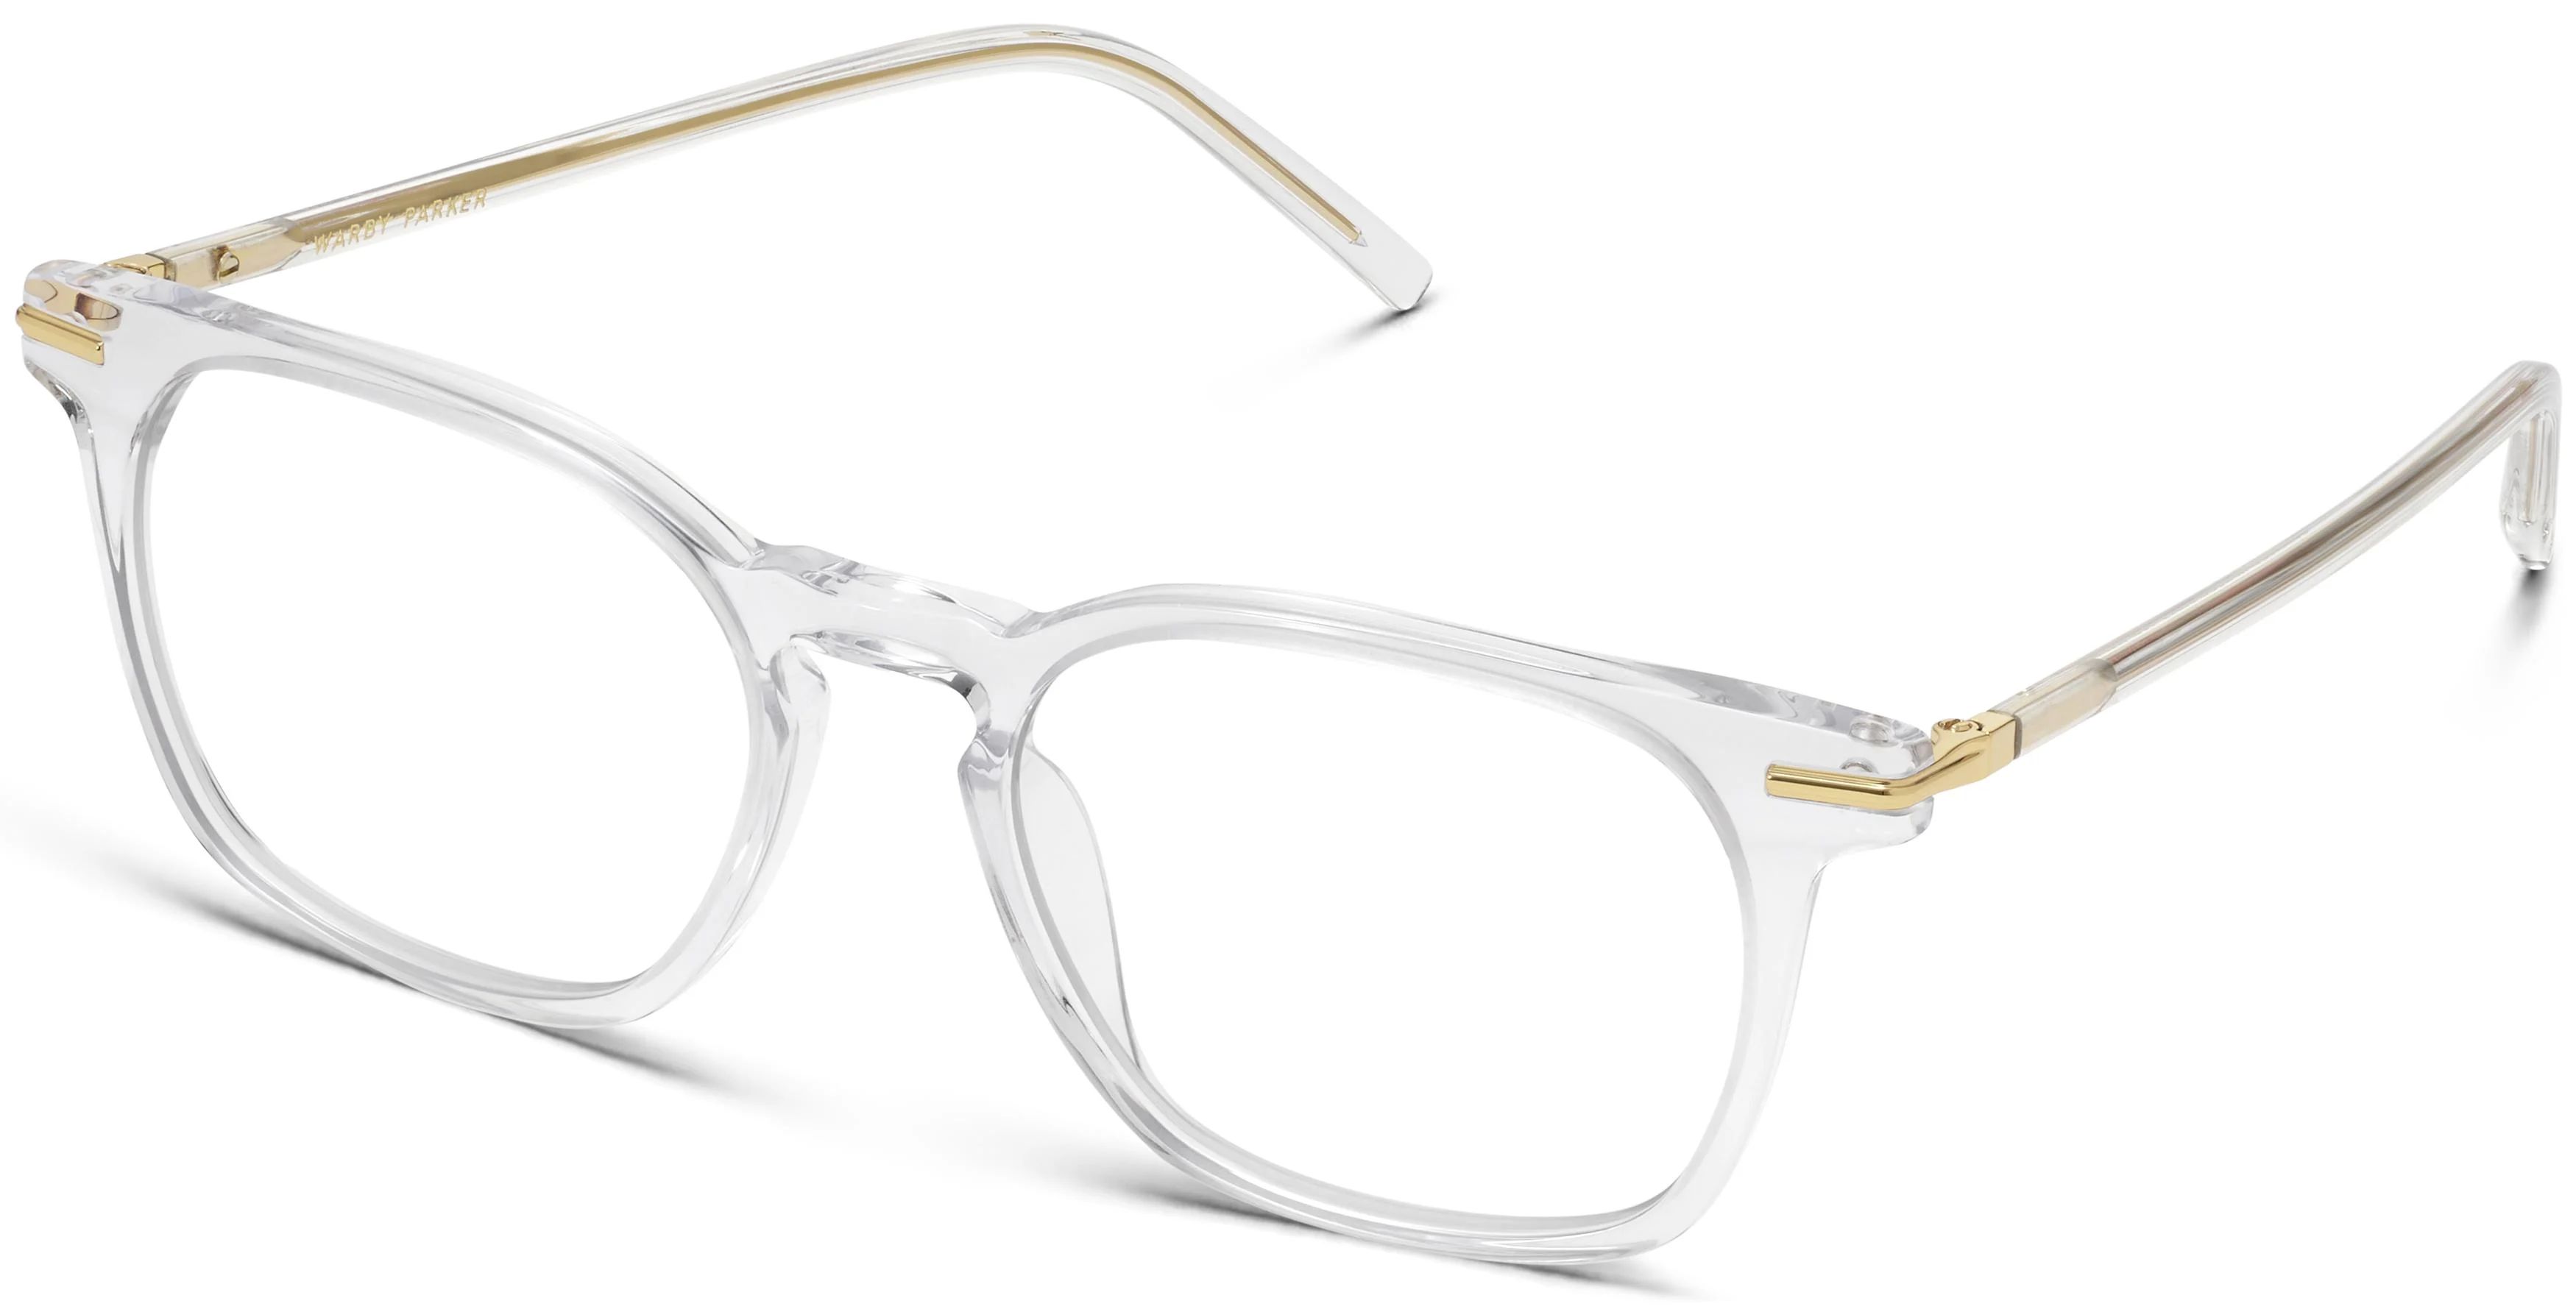 Santiago Eyeglasses in Crystal with Polished Gold | Warby Parker | Warby Parker (US)